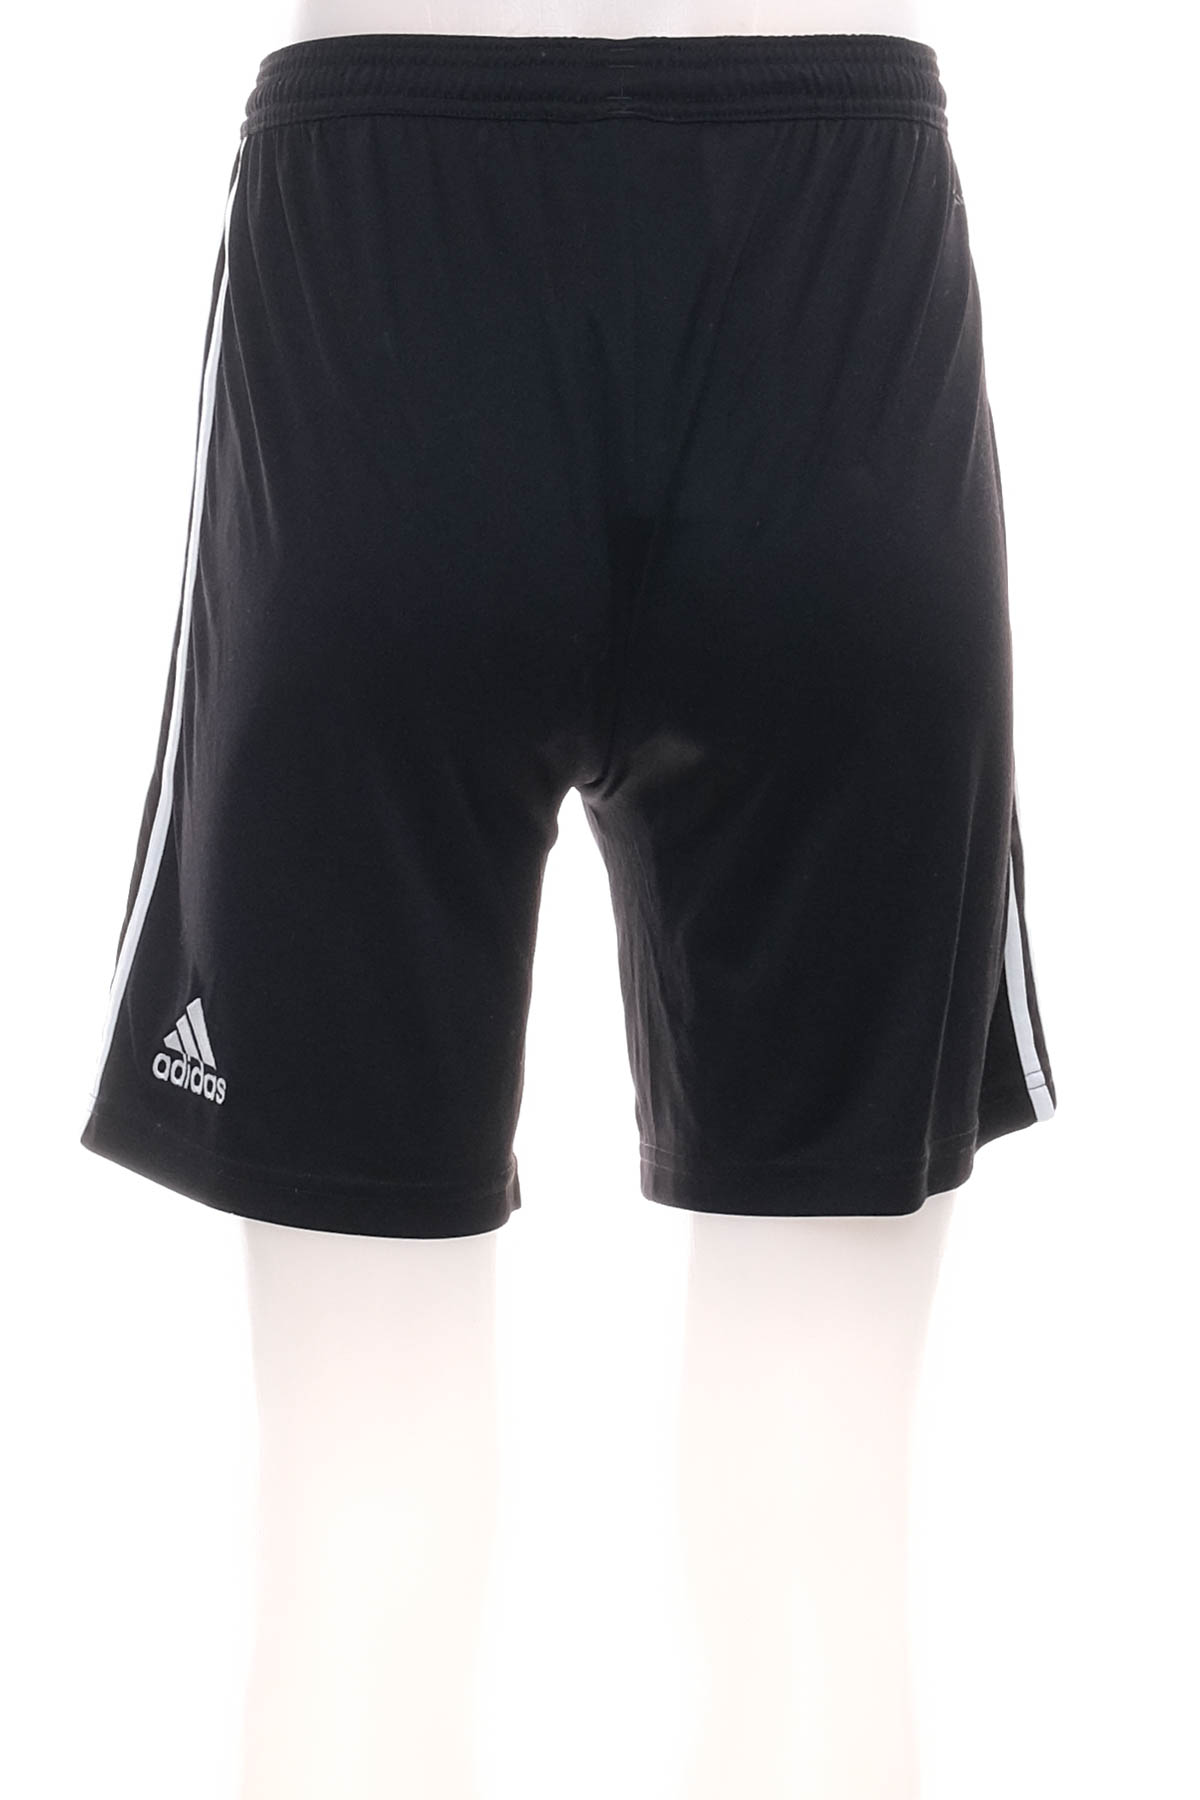 Shorts for boys - Adidas - 1